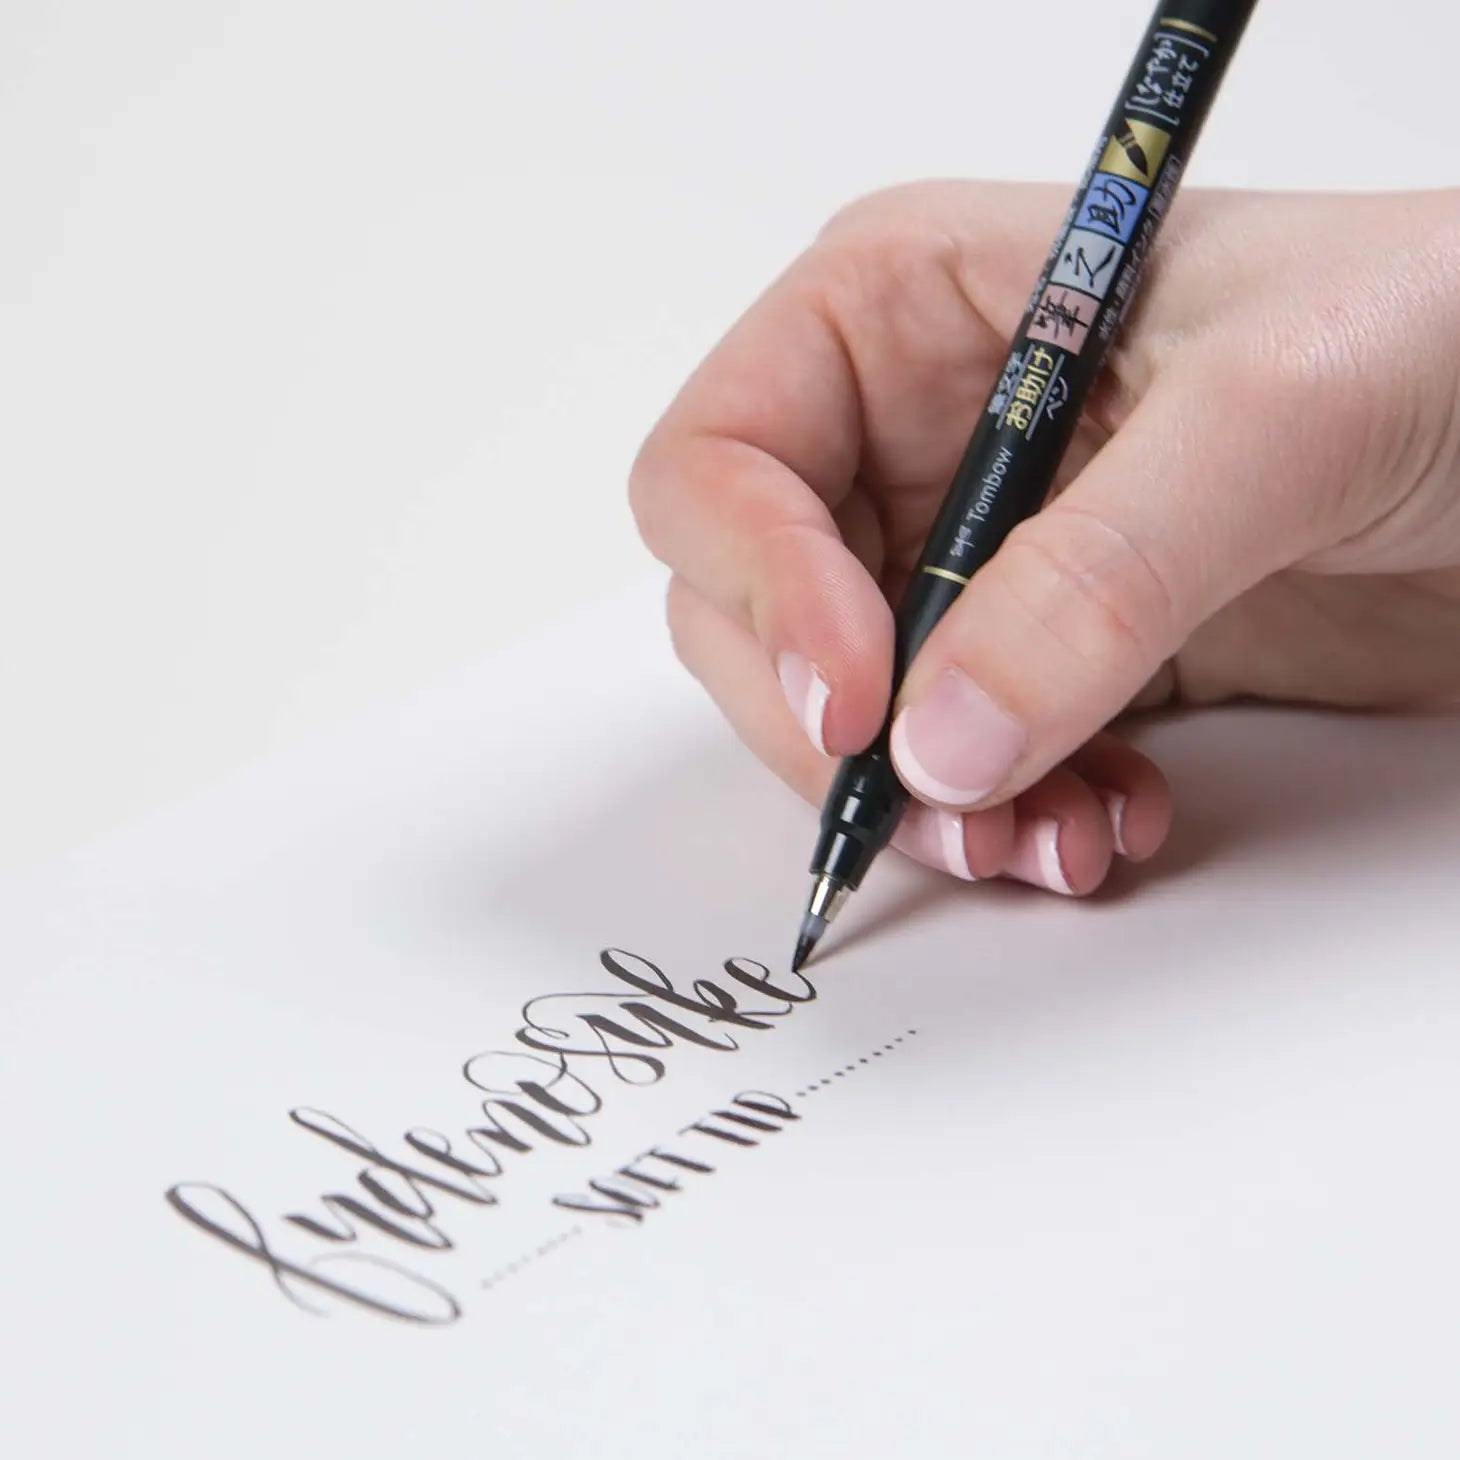 Tombow Fudenosuke Calligraphy Brush Pens